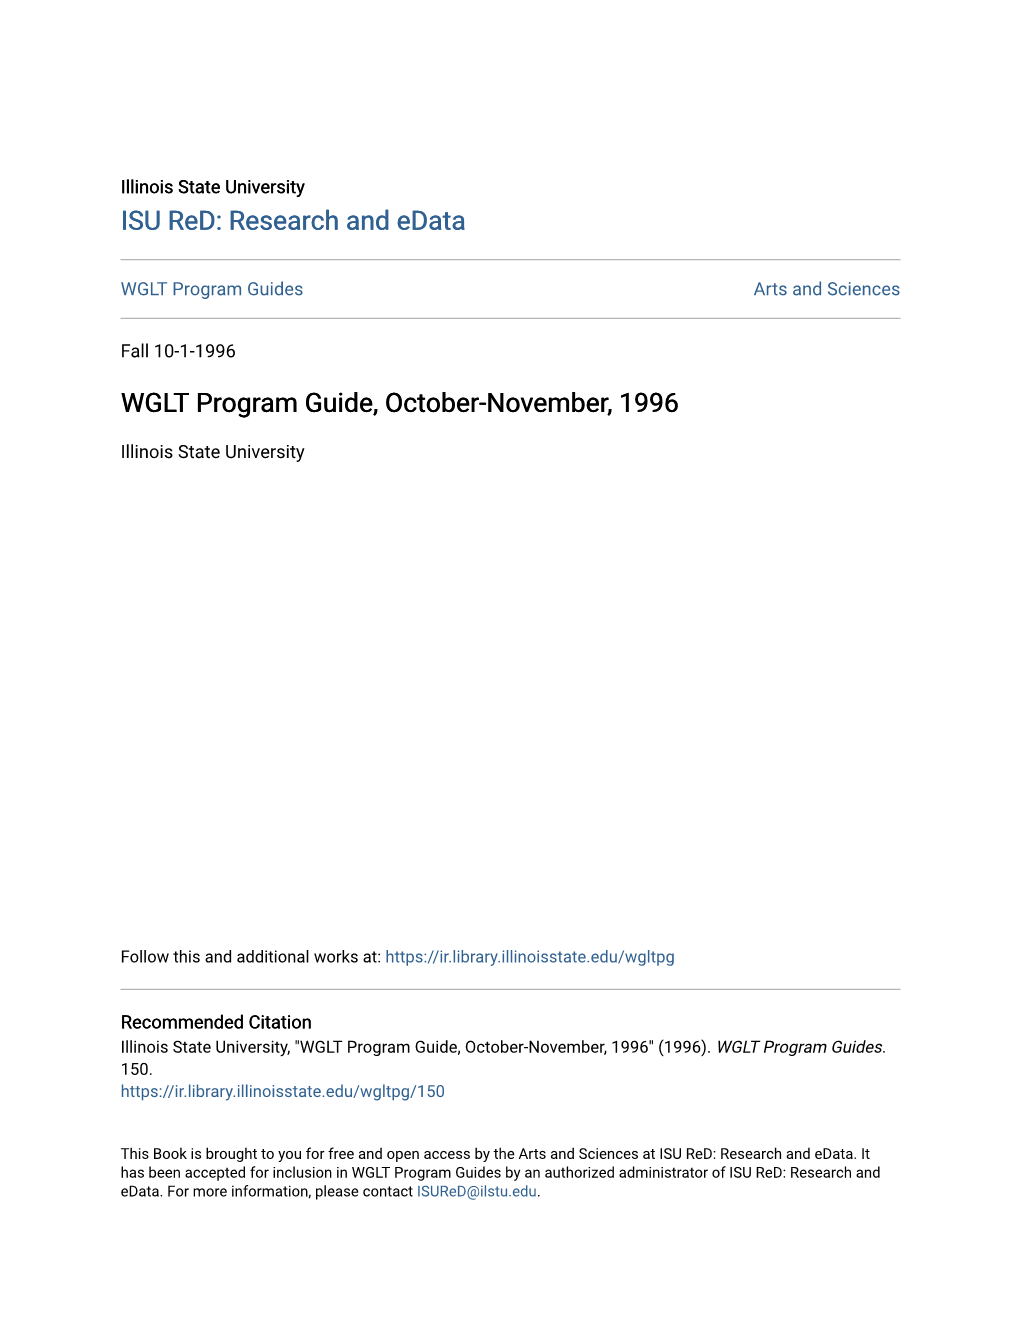 WGLT Program Guide, October-November, 1996